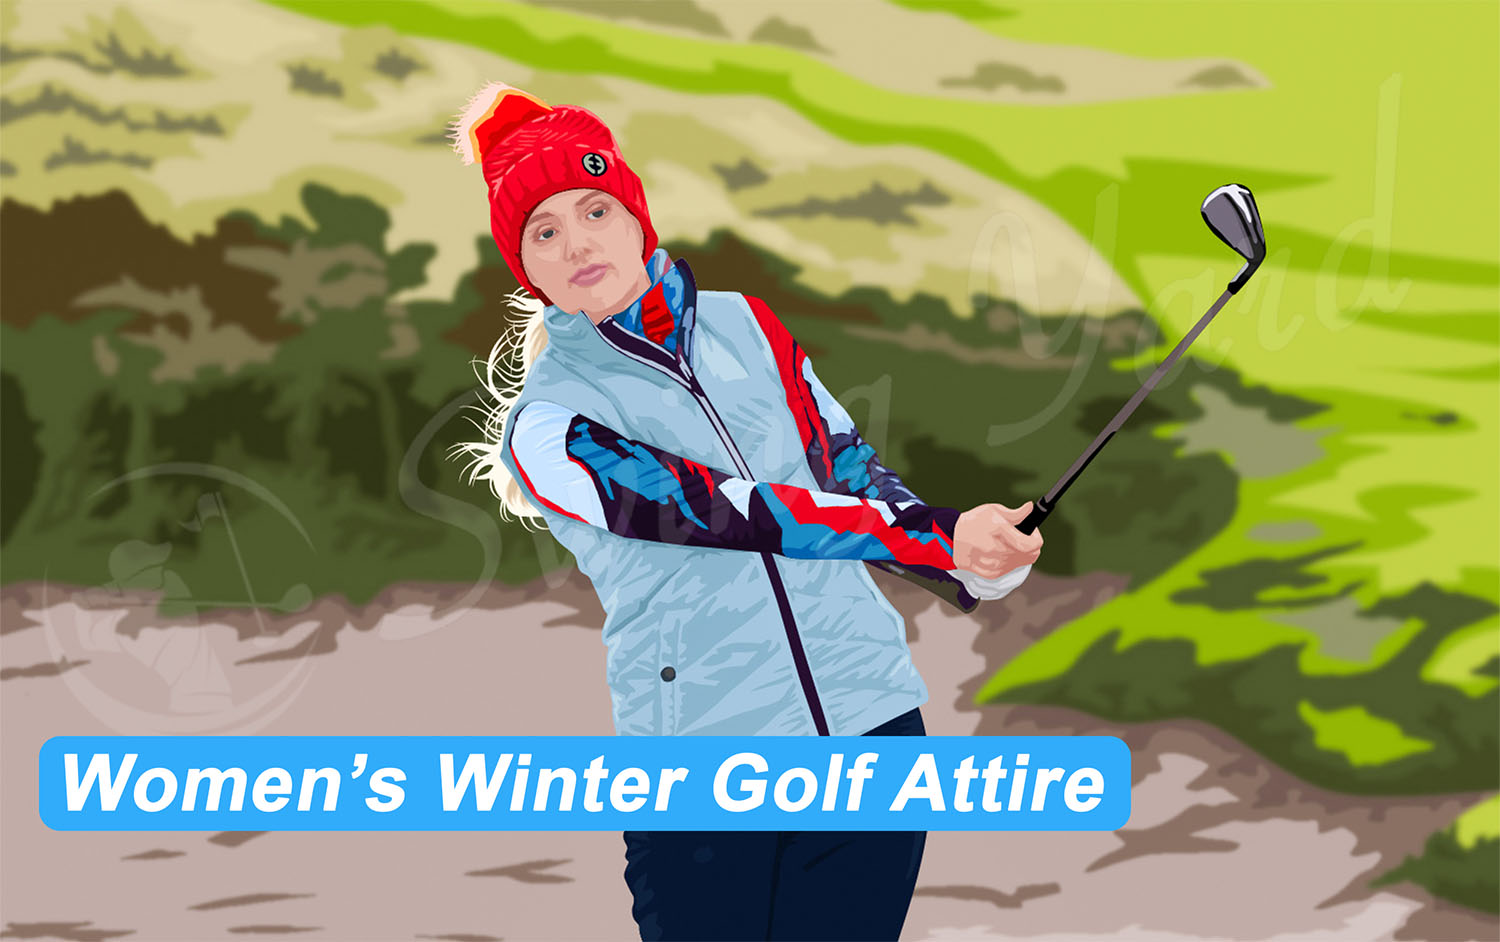 A woman golfer dressed in winter attire